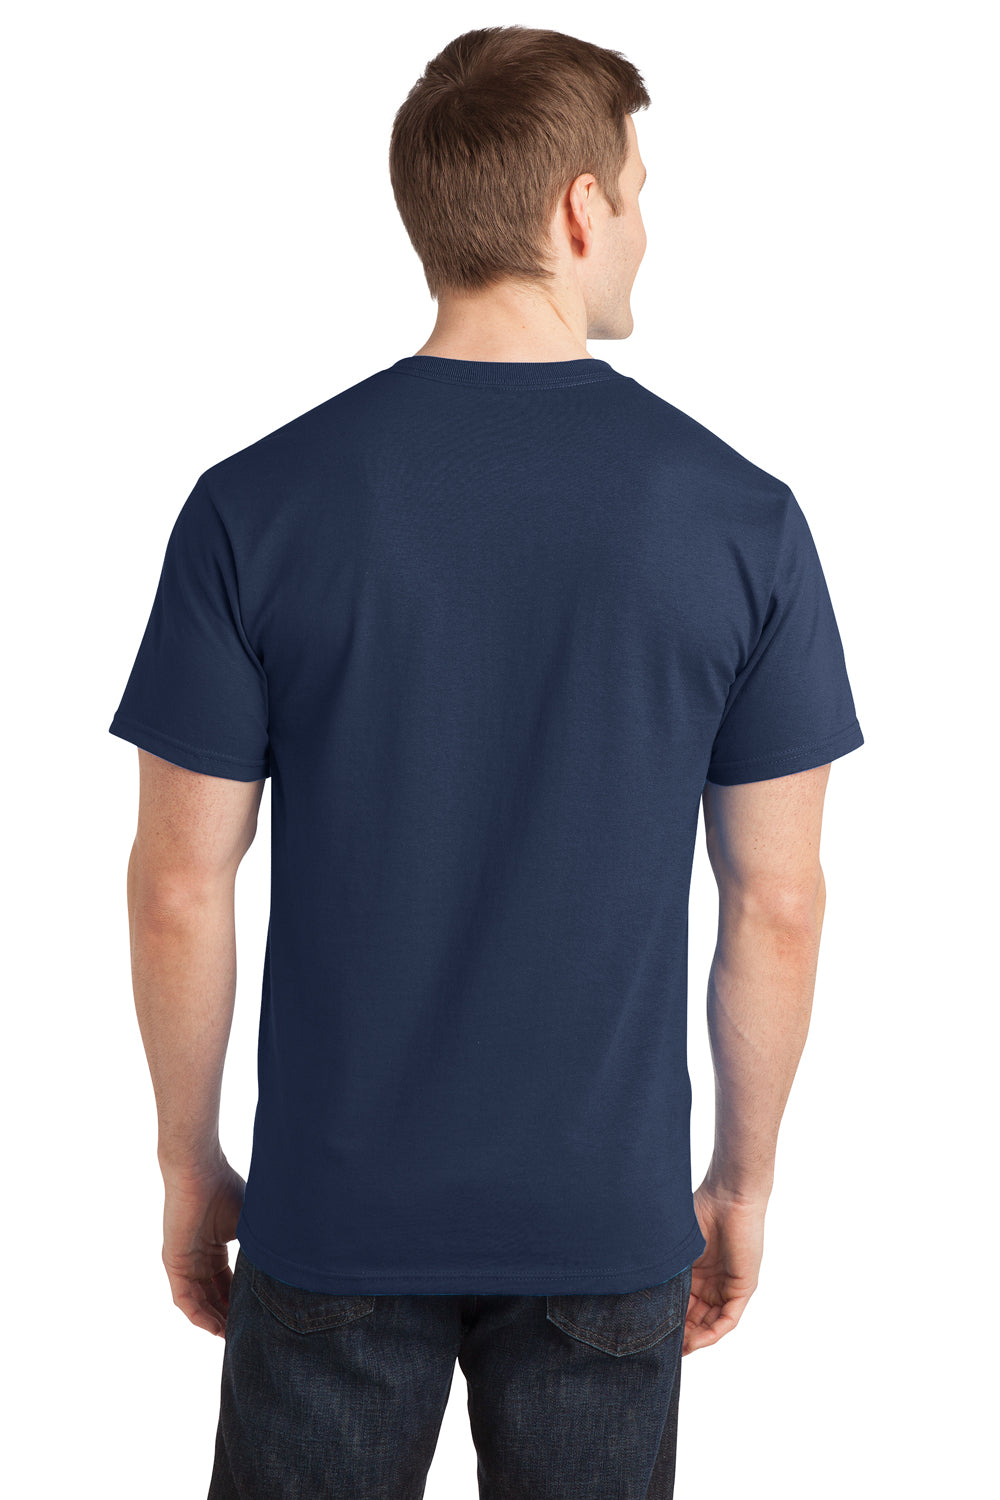 Port & Company PC150 Mens Short Sleeve Crewneck T-Shirt Navy Blue Back